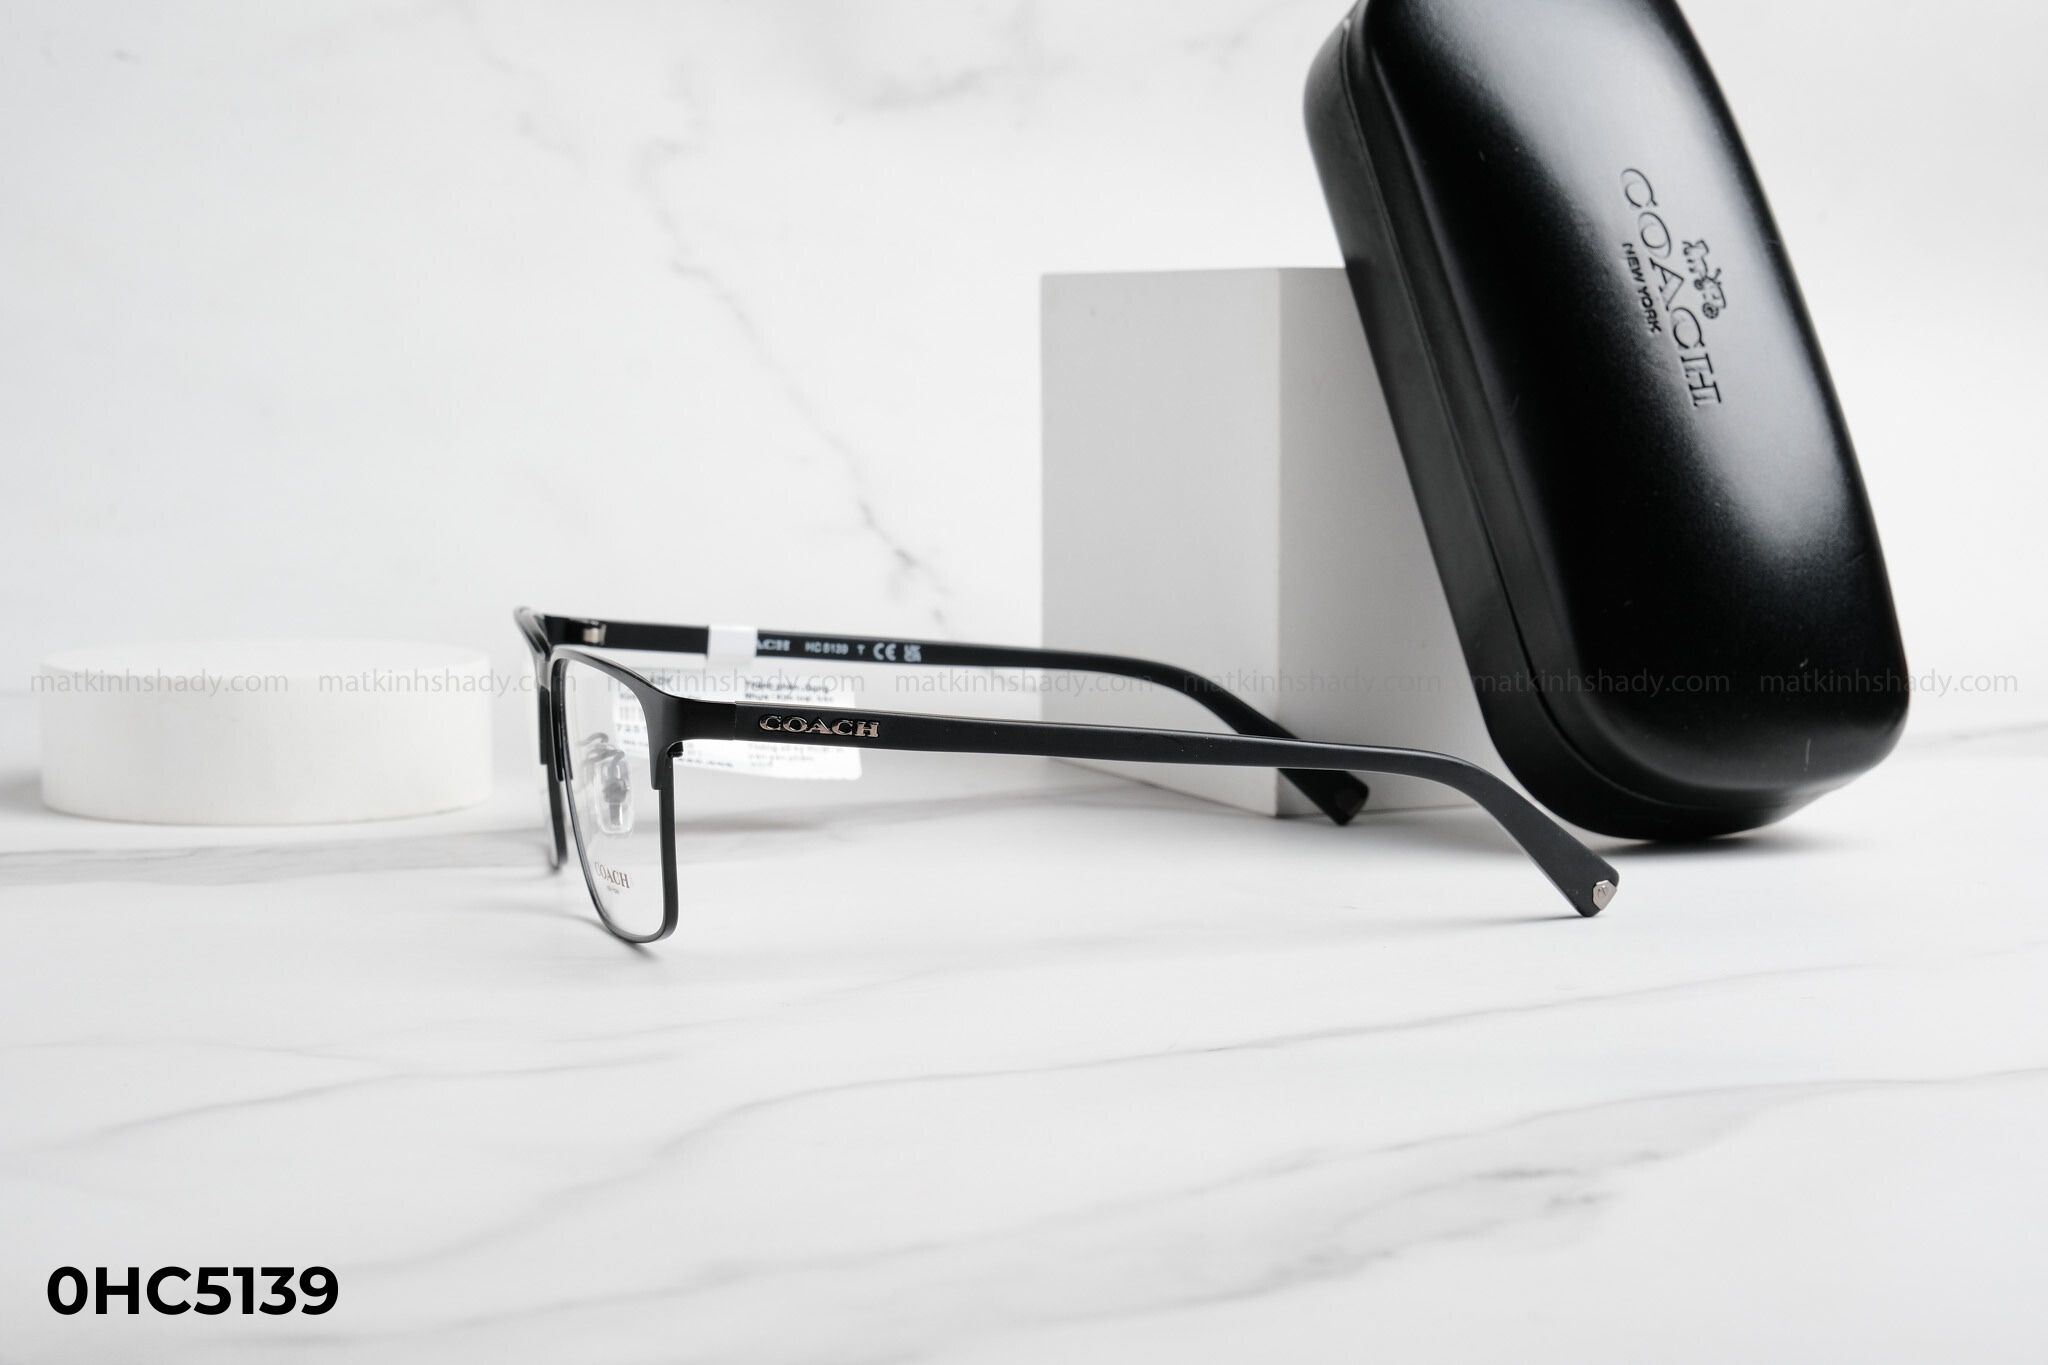  Coach Eyewear - Glasses - 0HC5139 